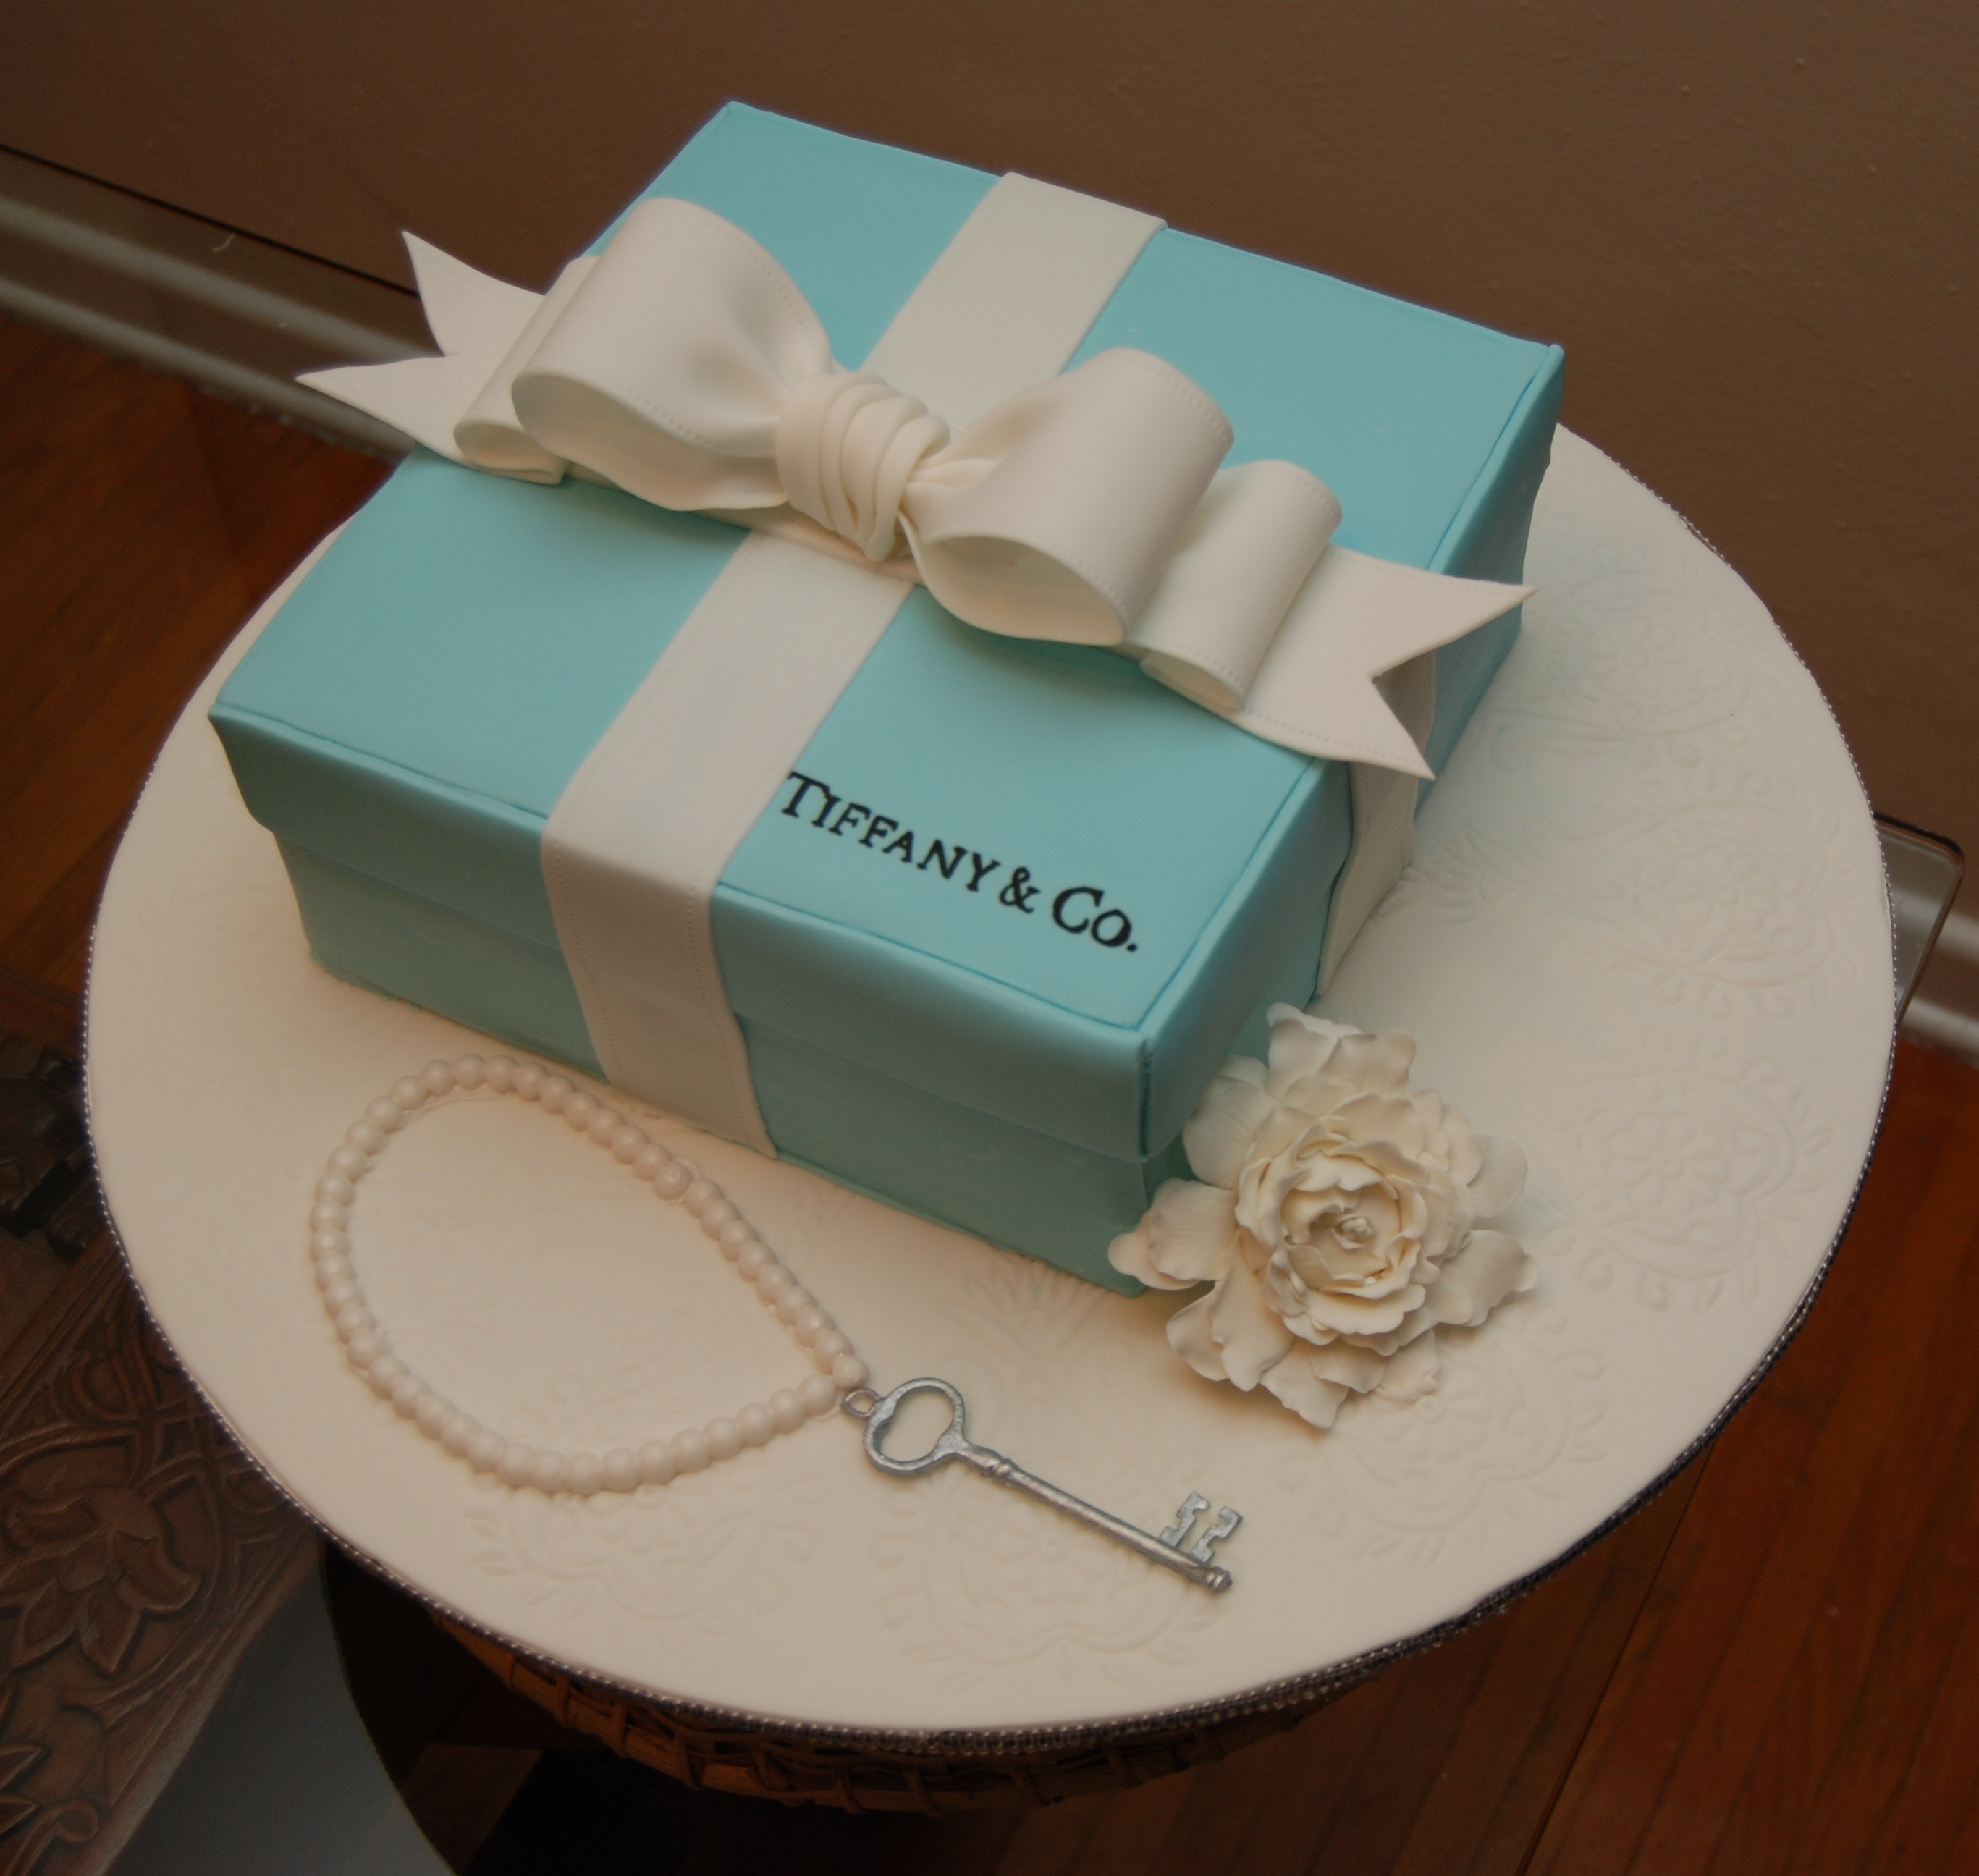 Best ideas about Happy Birthday Tiffany Cake
. Save or Pin Tiffany Box Birthday Cake CakeCentral Now.